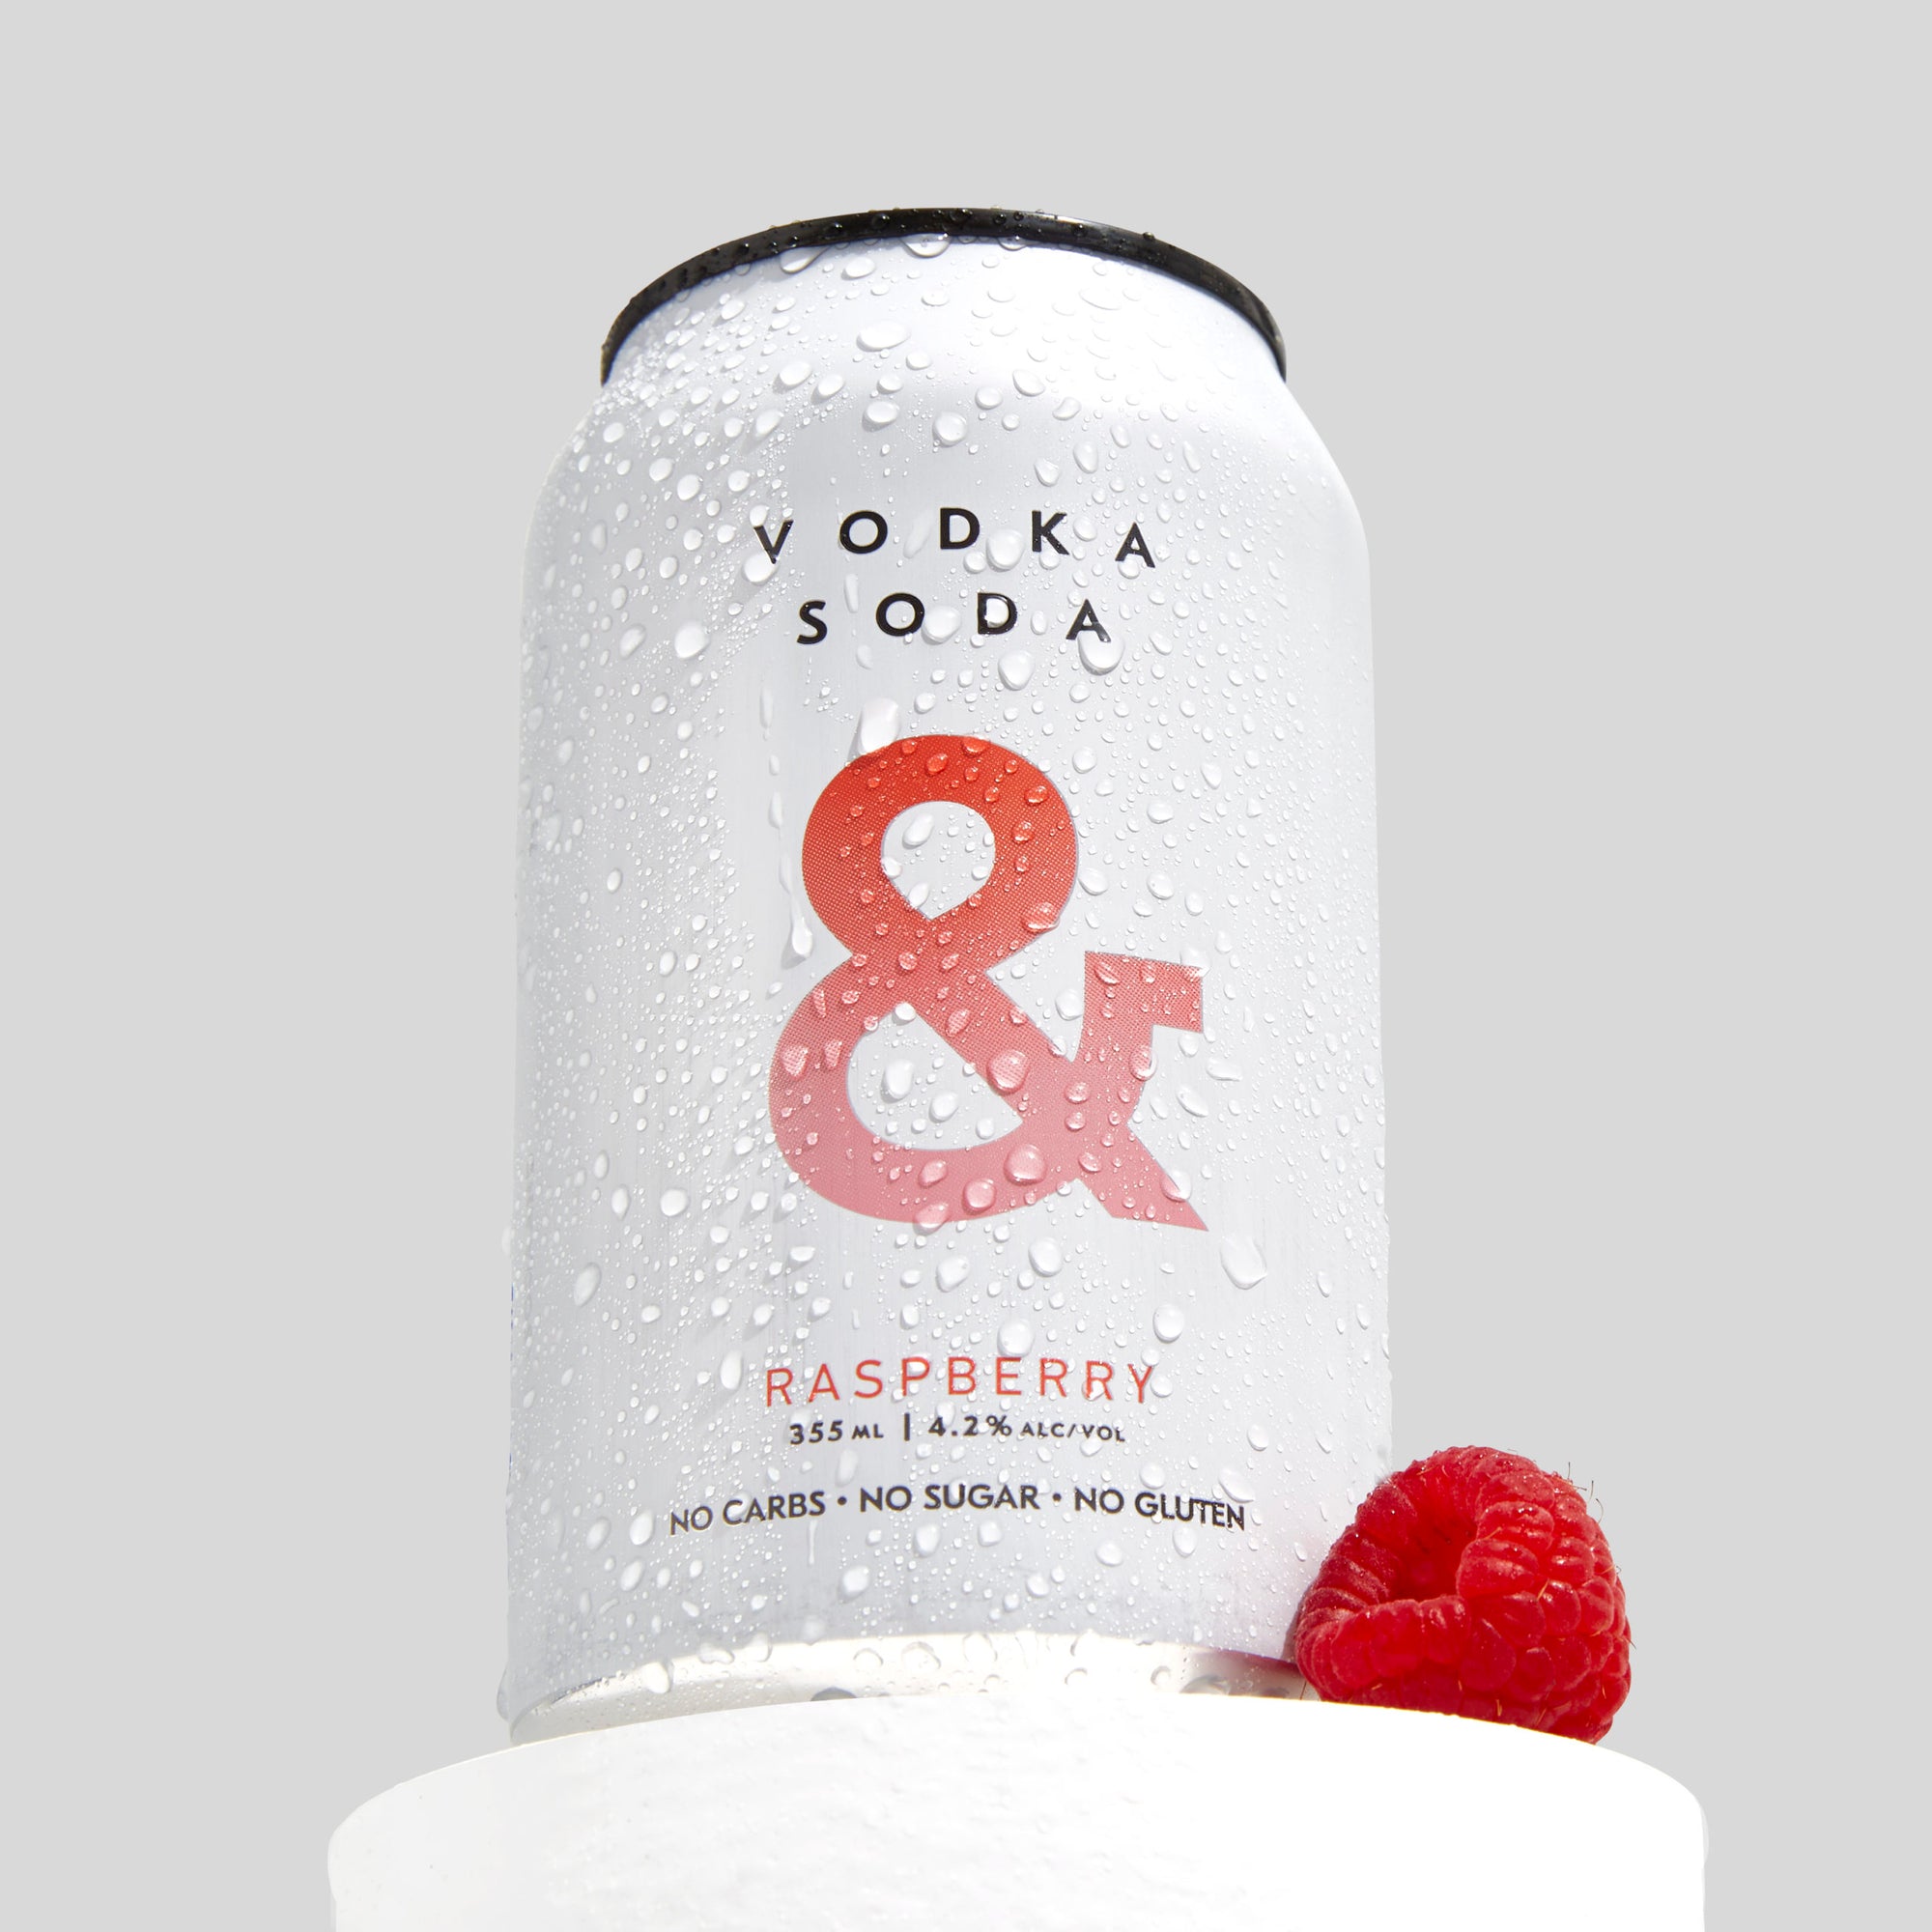 Vodka Soda & Raspberry Cans 4.2% (16 Pack)